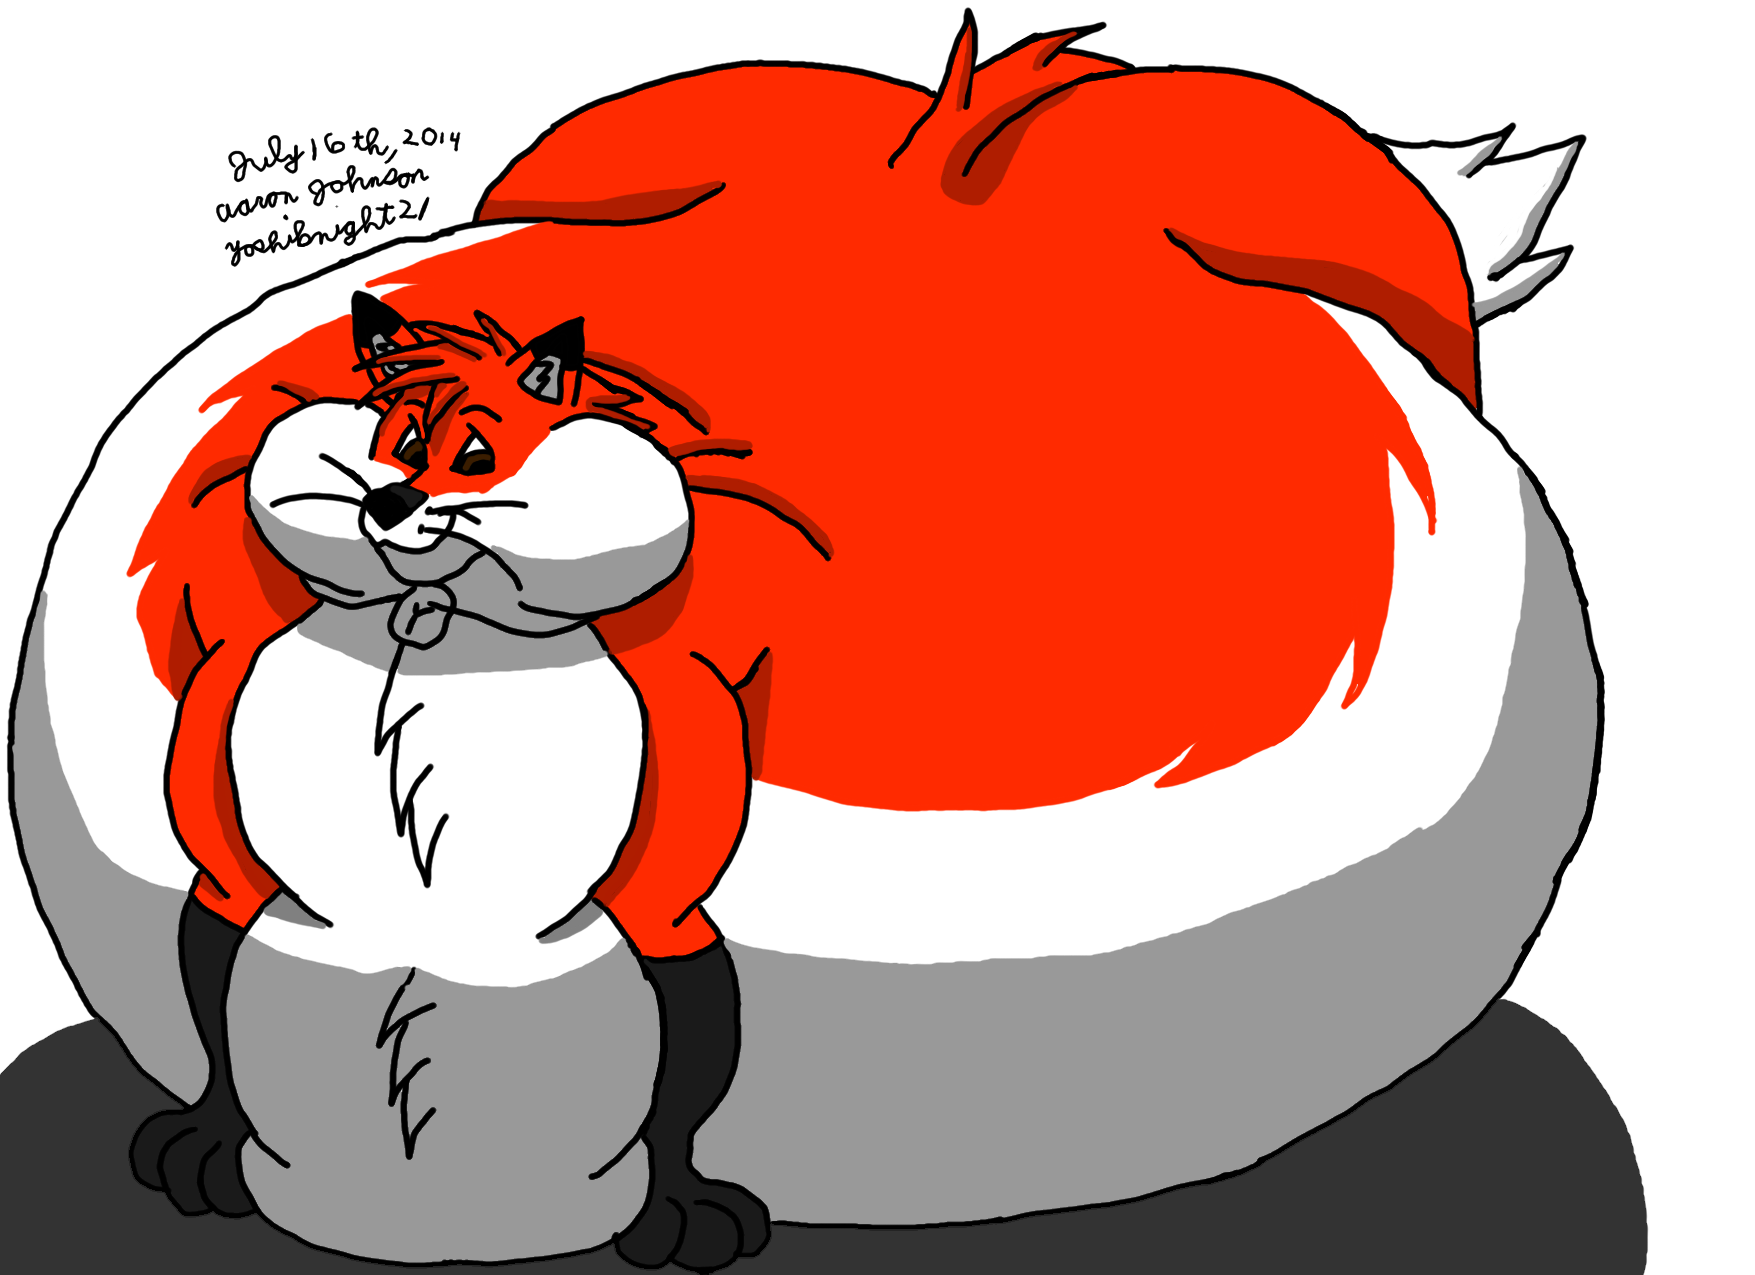 Fat furs Fox. Fat furry Fox. Аукционный Лис fat. Furry Fox become fat.